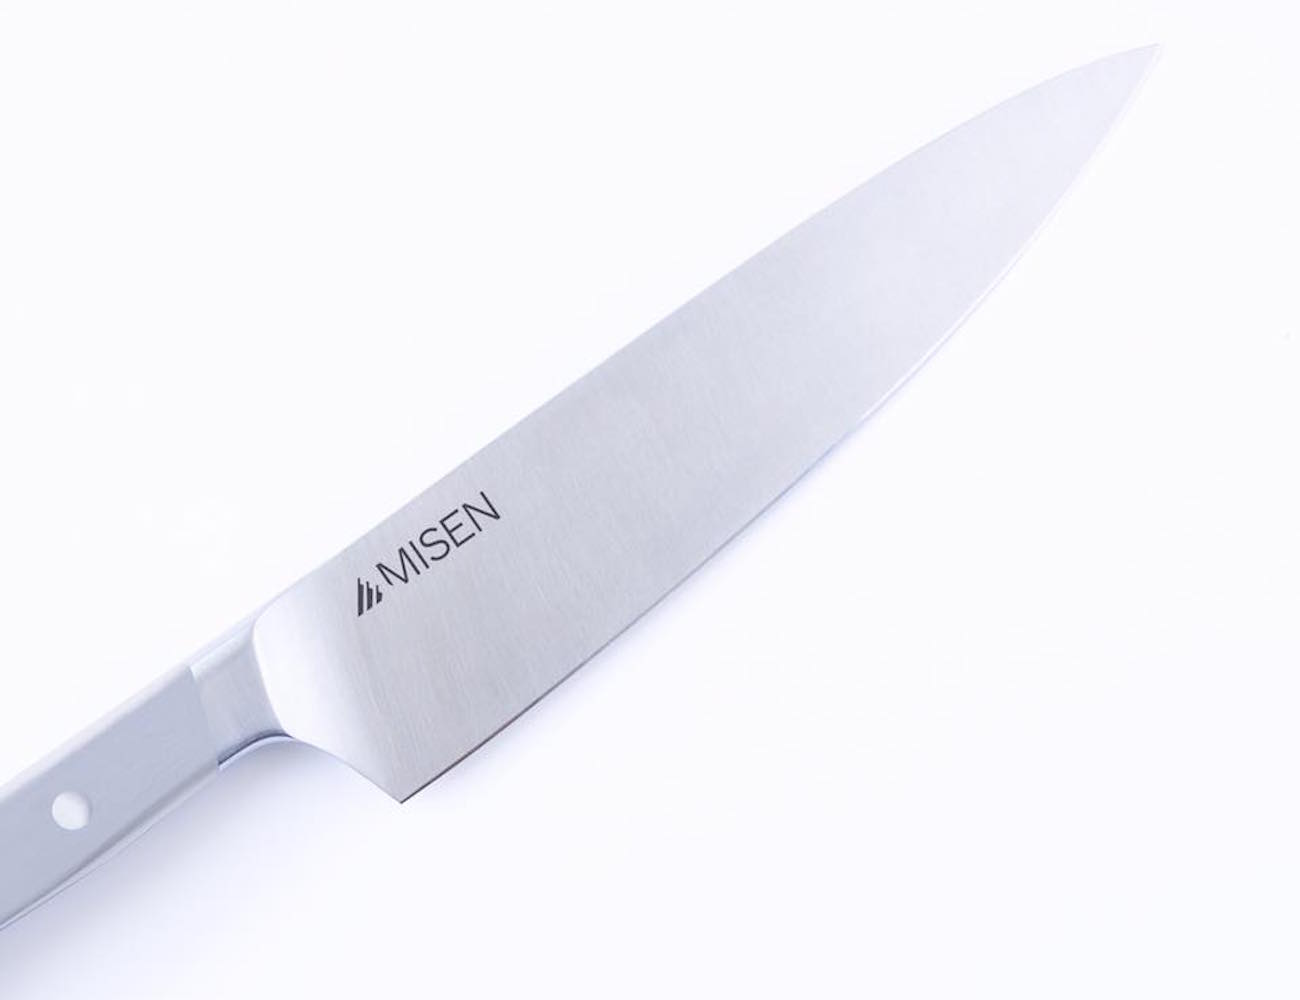 Misen The Versatile And Affordable Kitchen Knife Gadget Flow